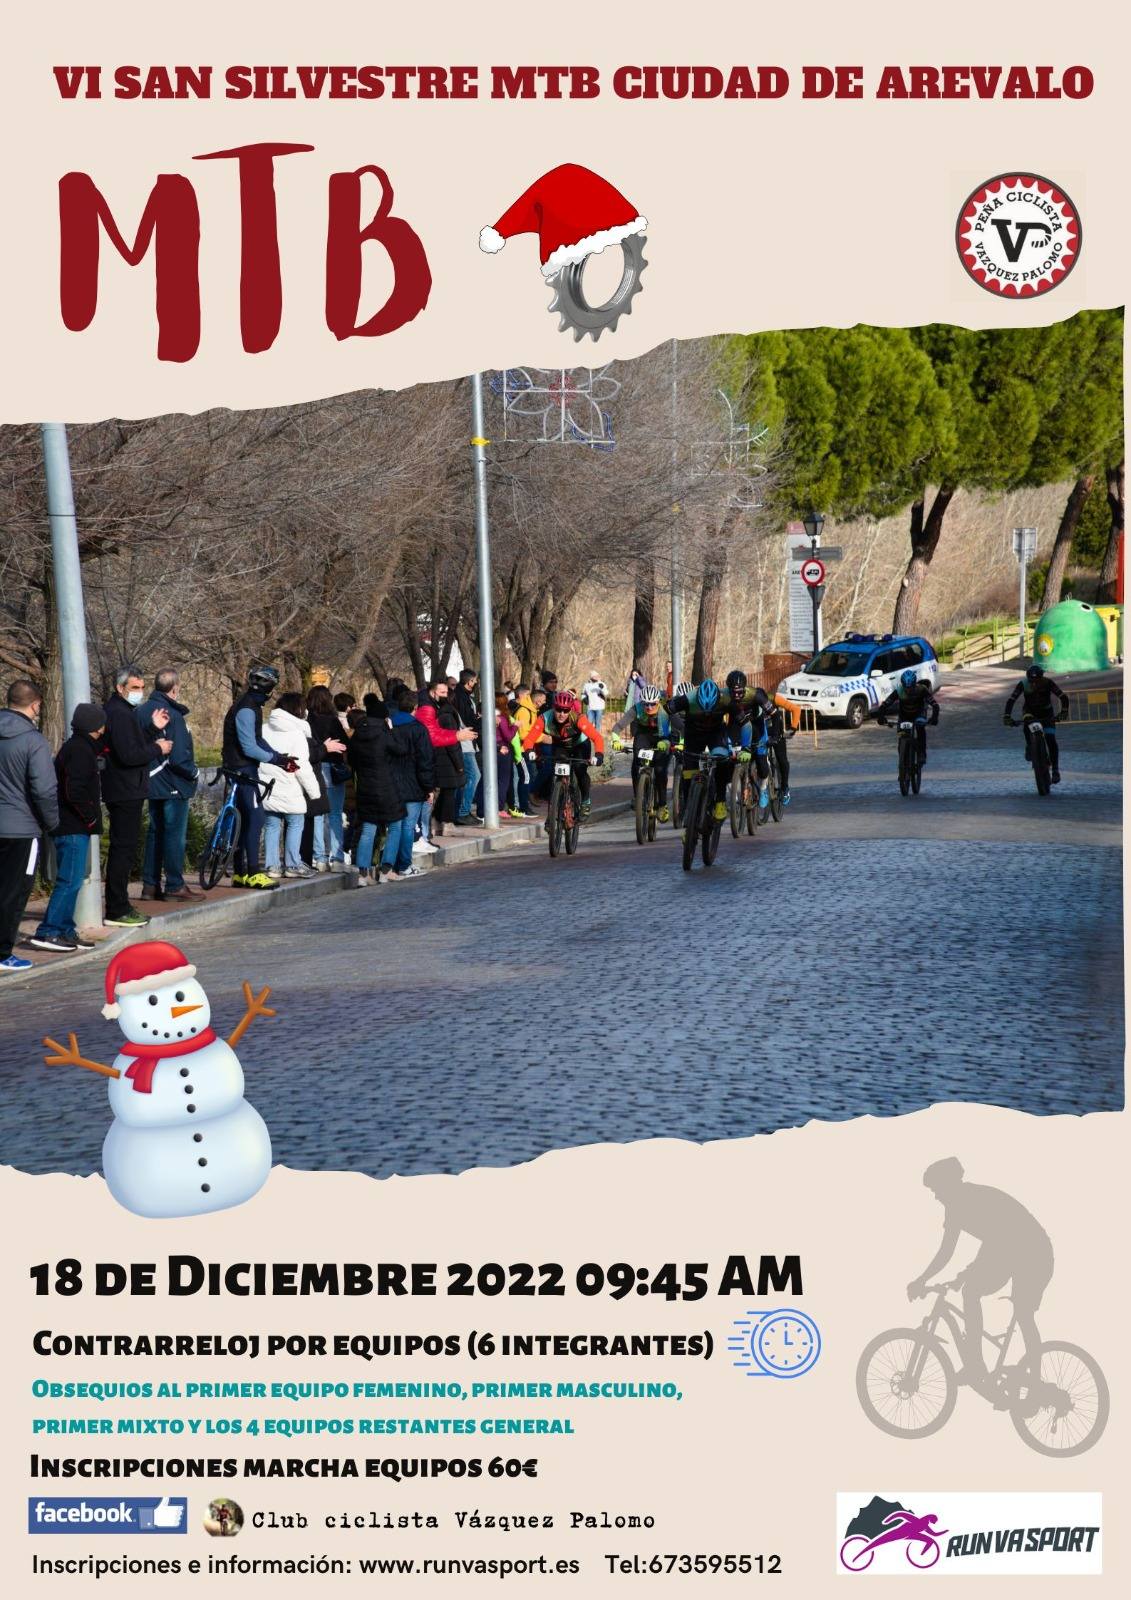 Event Poster VI SAN SILVESTRE CIUDAD DE AREVALO MTB